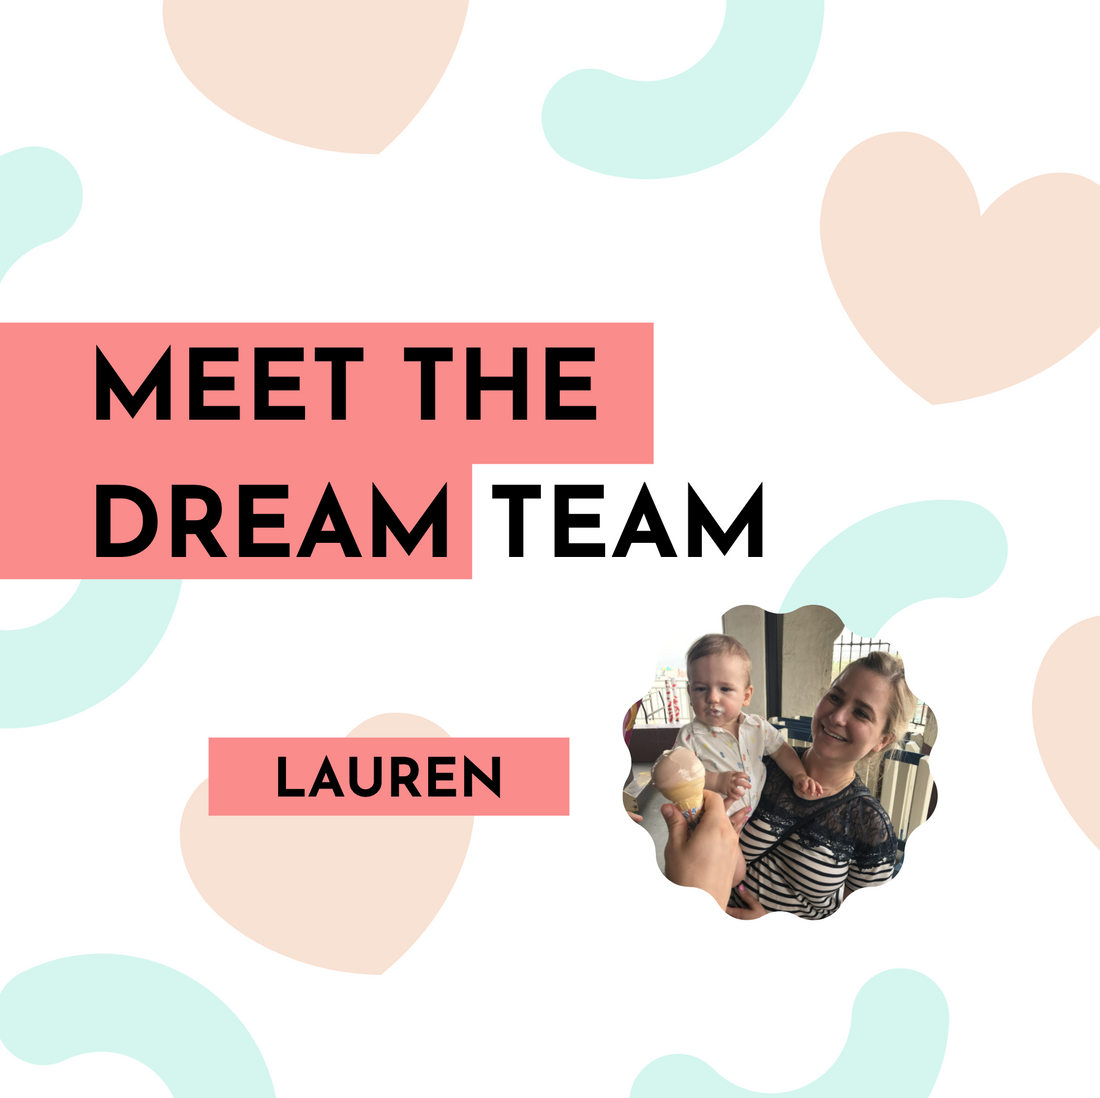 Dream Team: Lauren!